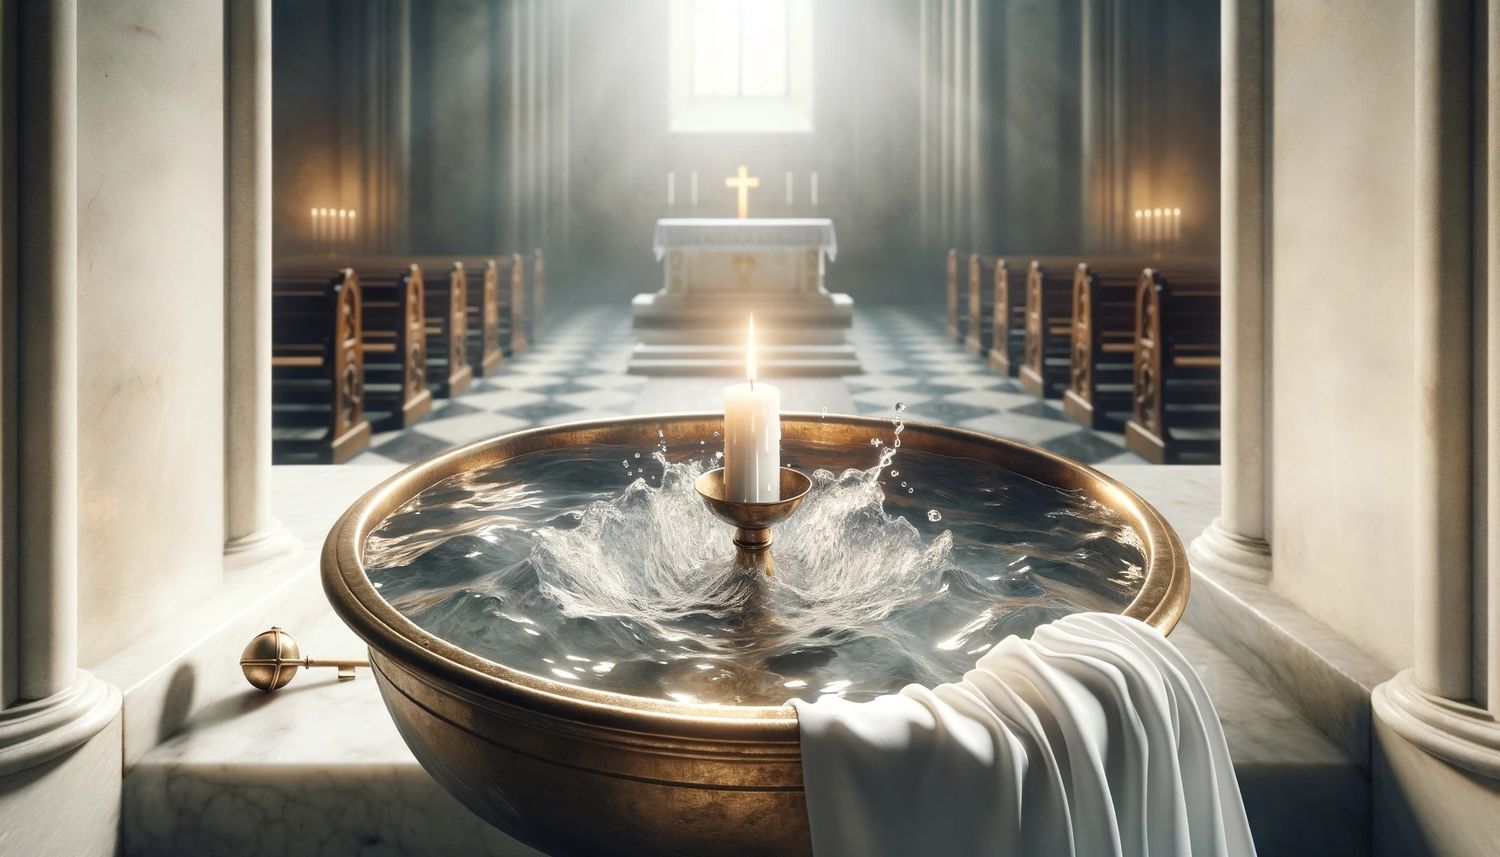 Why Does The Catholic Church Practice Infant Baptism?